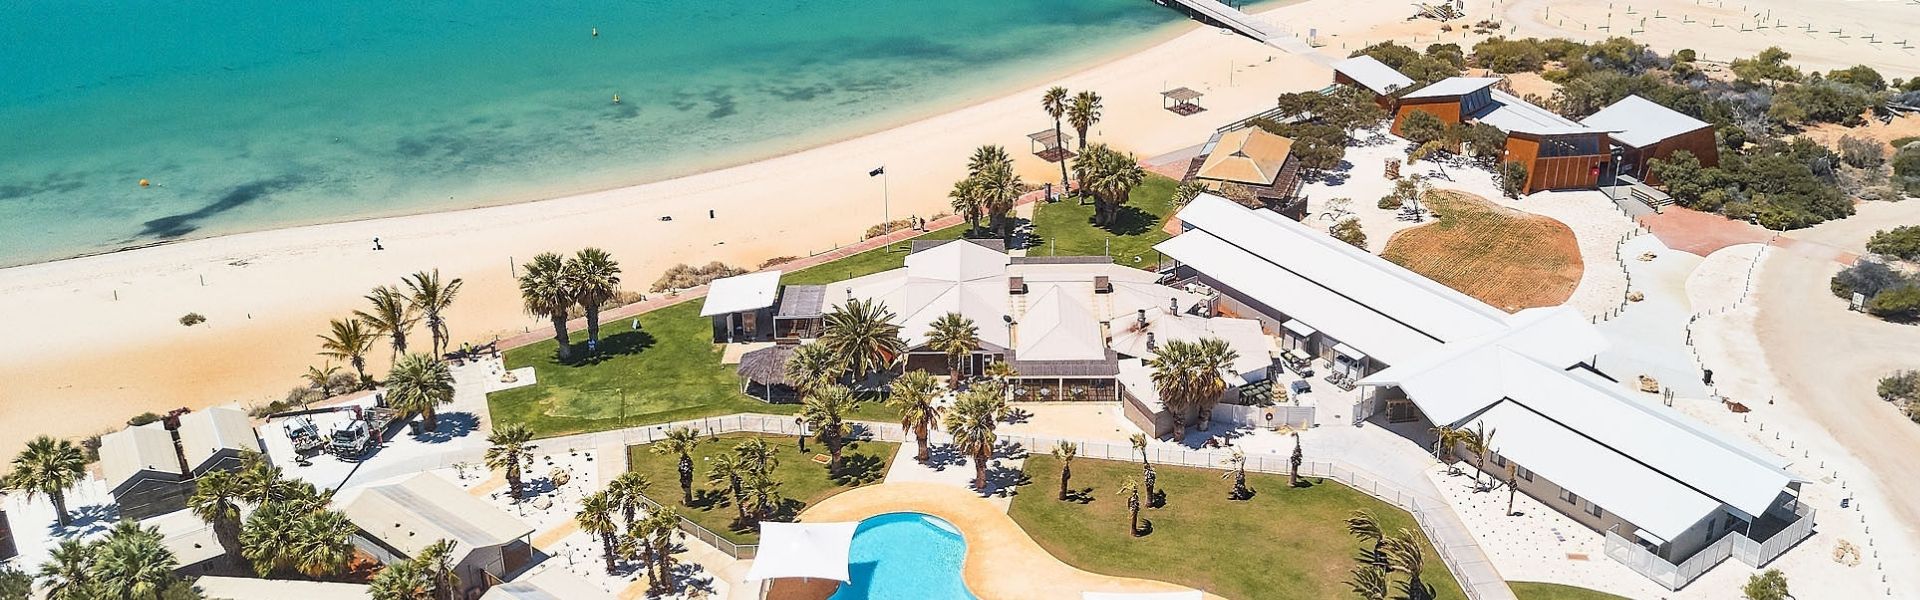 Beachside aerial view of RAC Monkey Mia Dolphin Resort